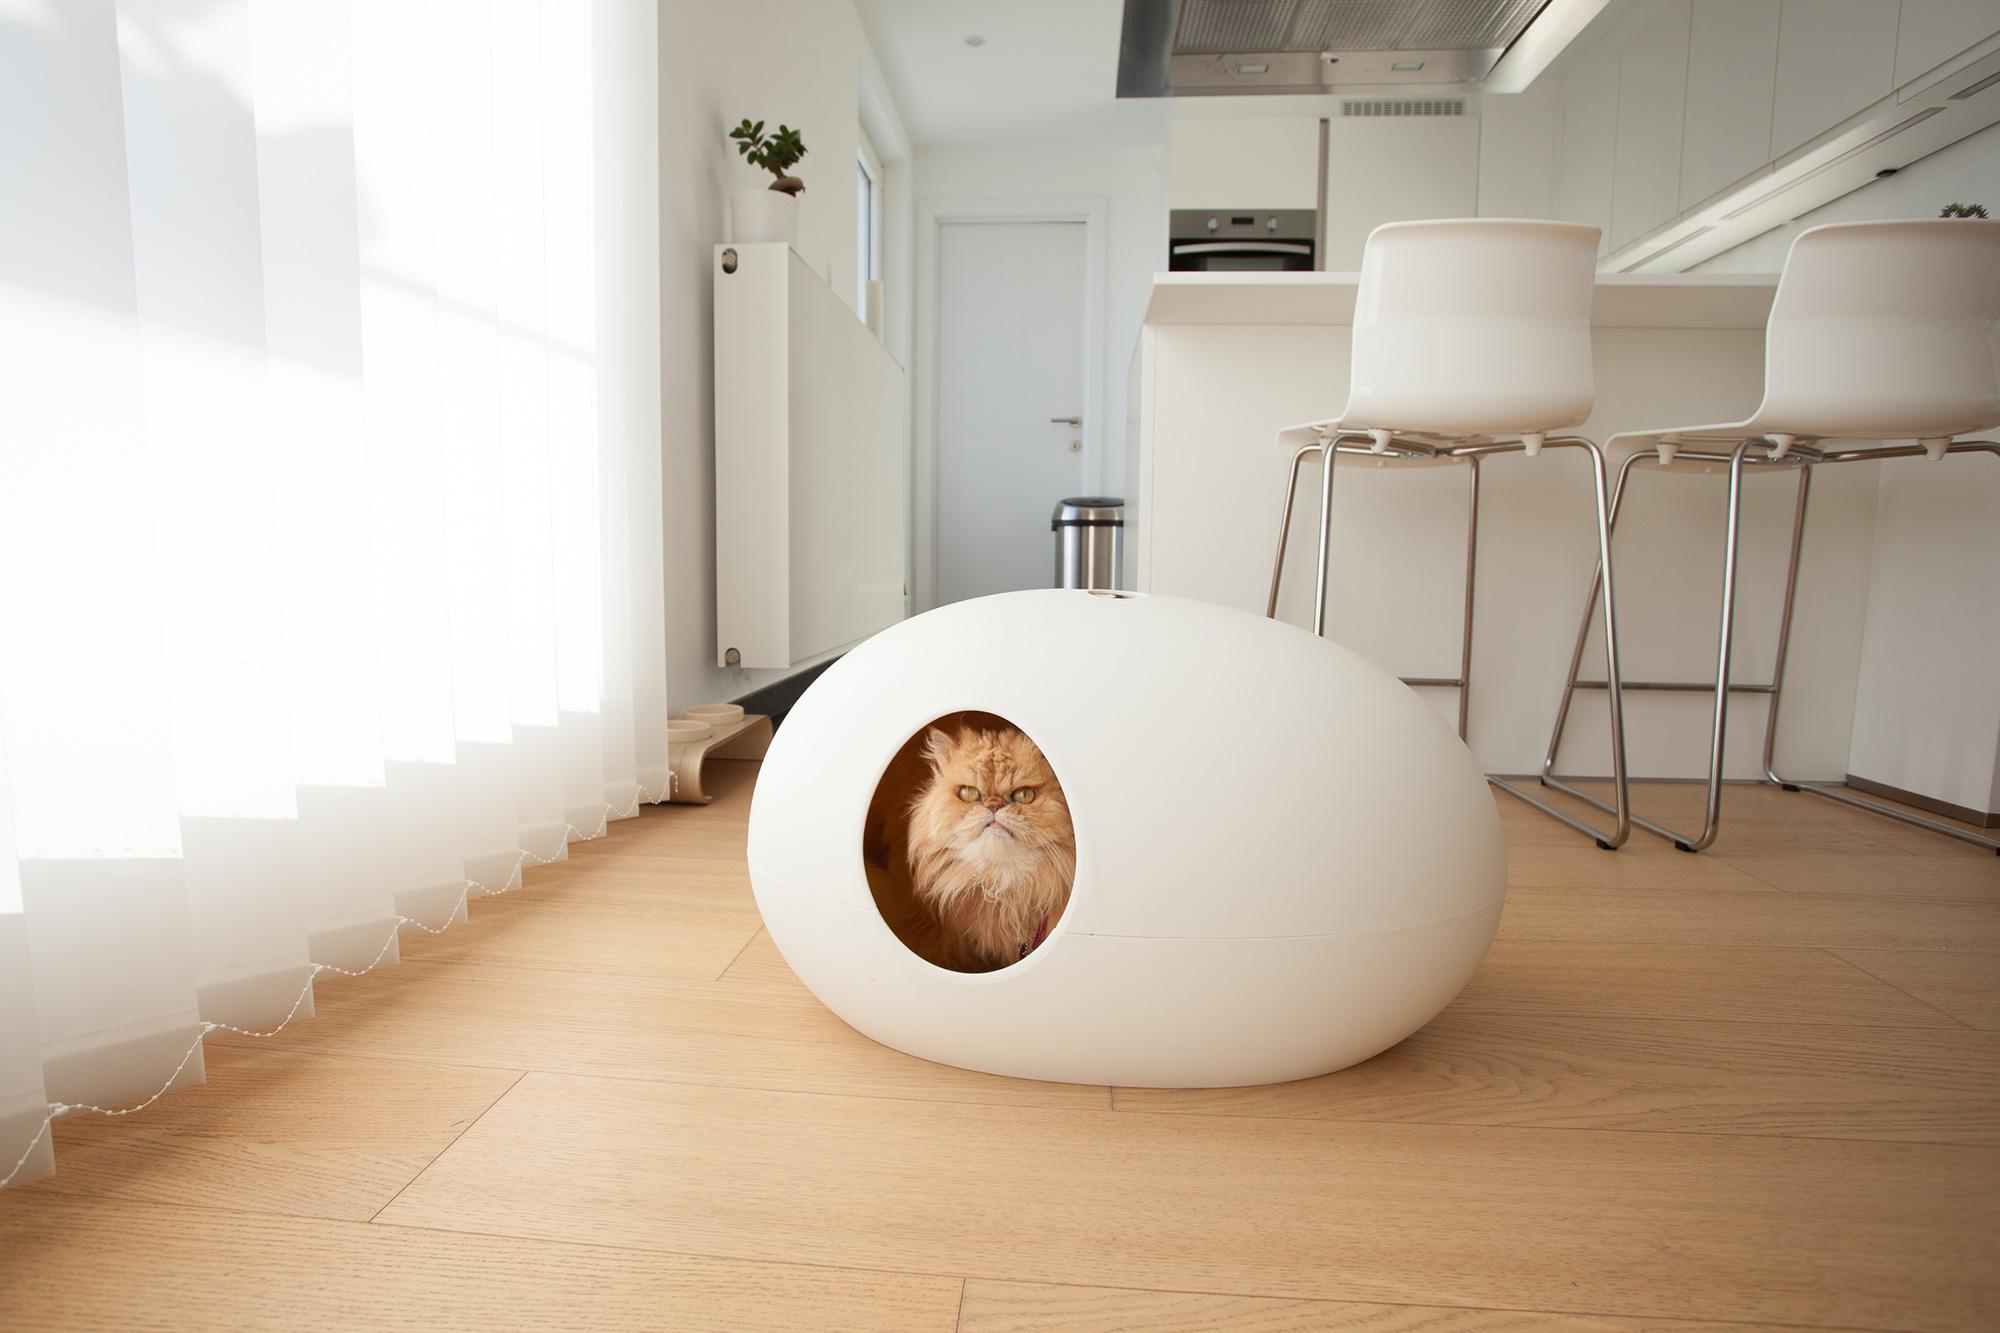 So gut kann eine Katzentoilette aussehen!
#poopoopeede #katzenklo #design